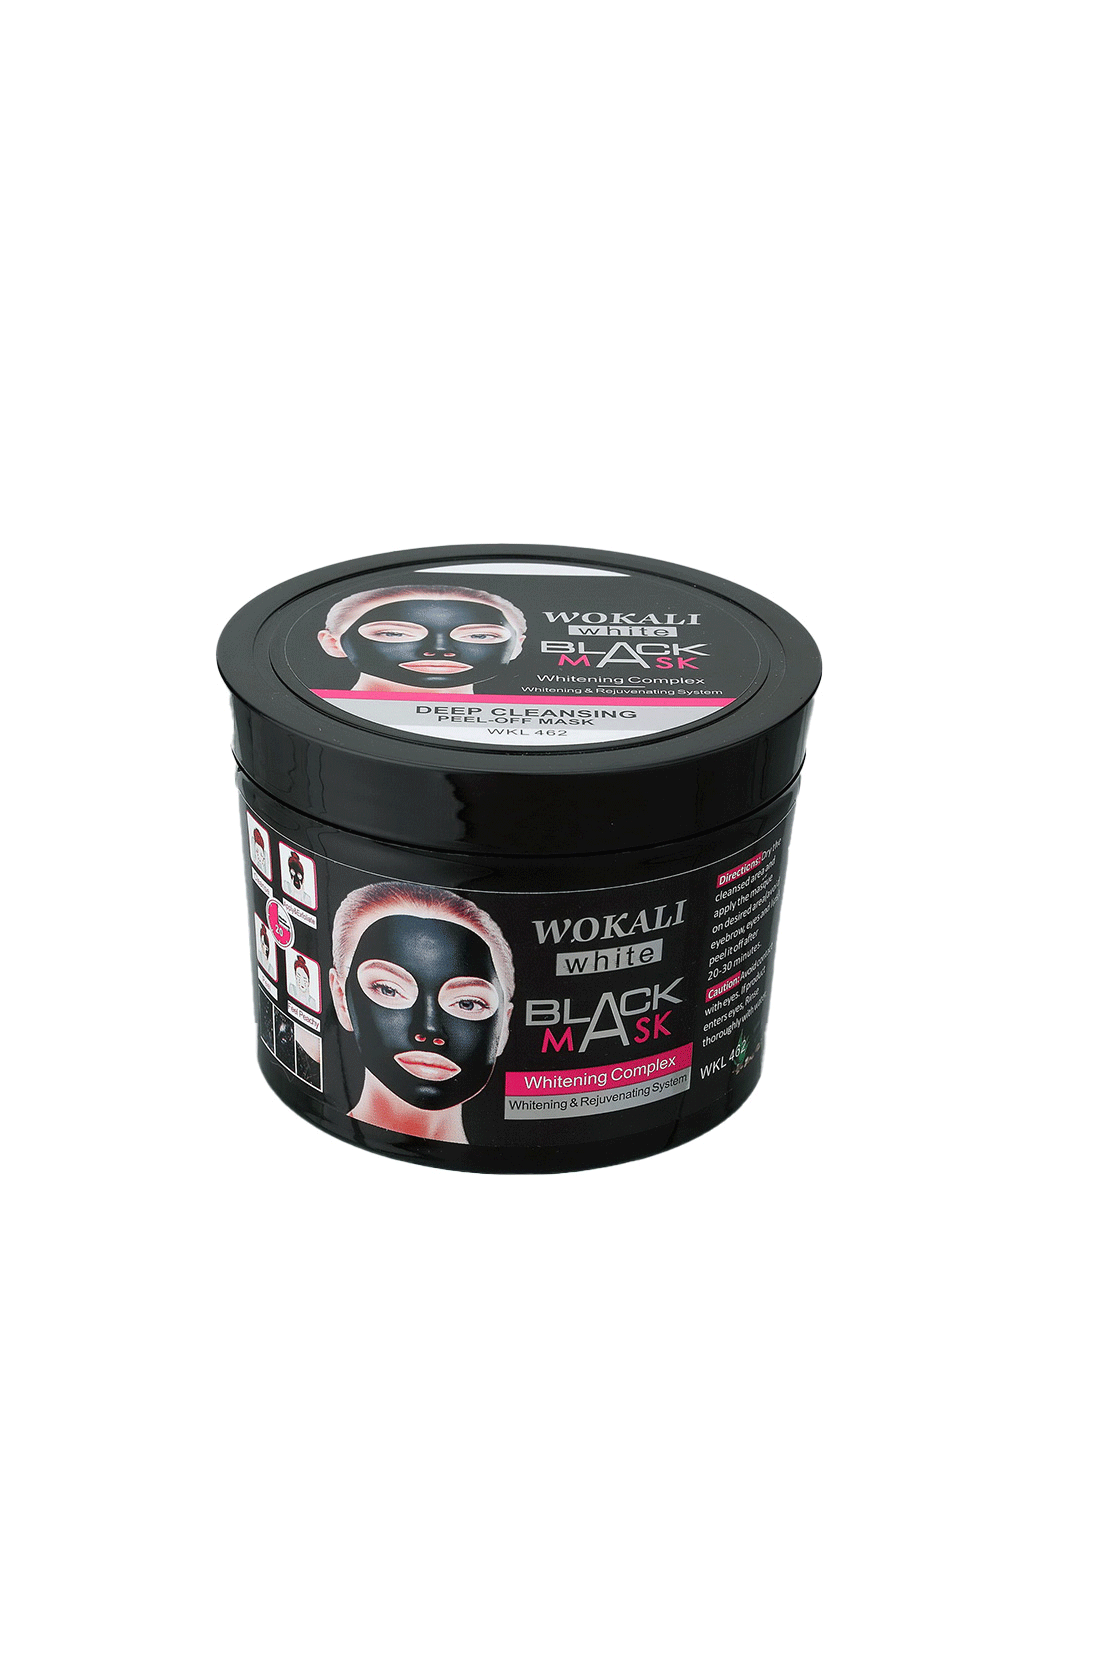 WKL462 Whitening Complex Black Peel Off Facial Mask 300g RIOS